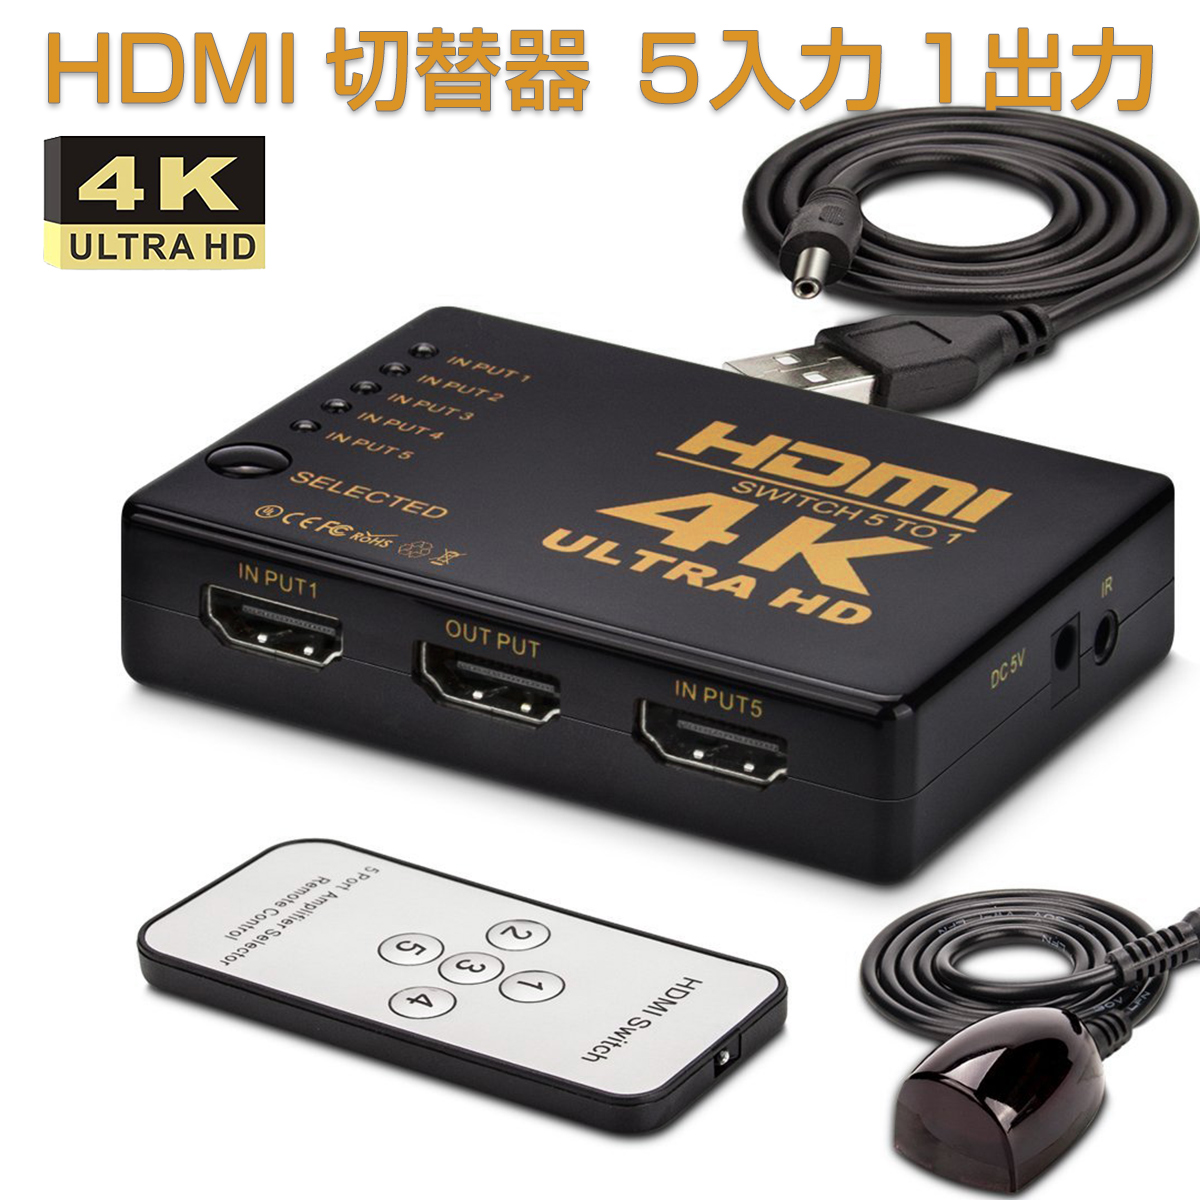 HDMI入力切替器 5入力1出力 リモコン付き - その他